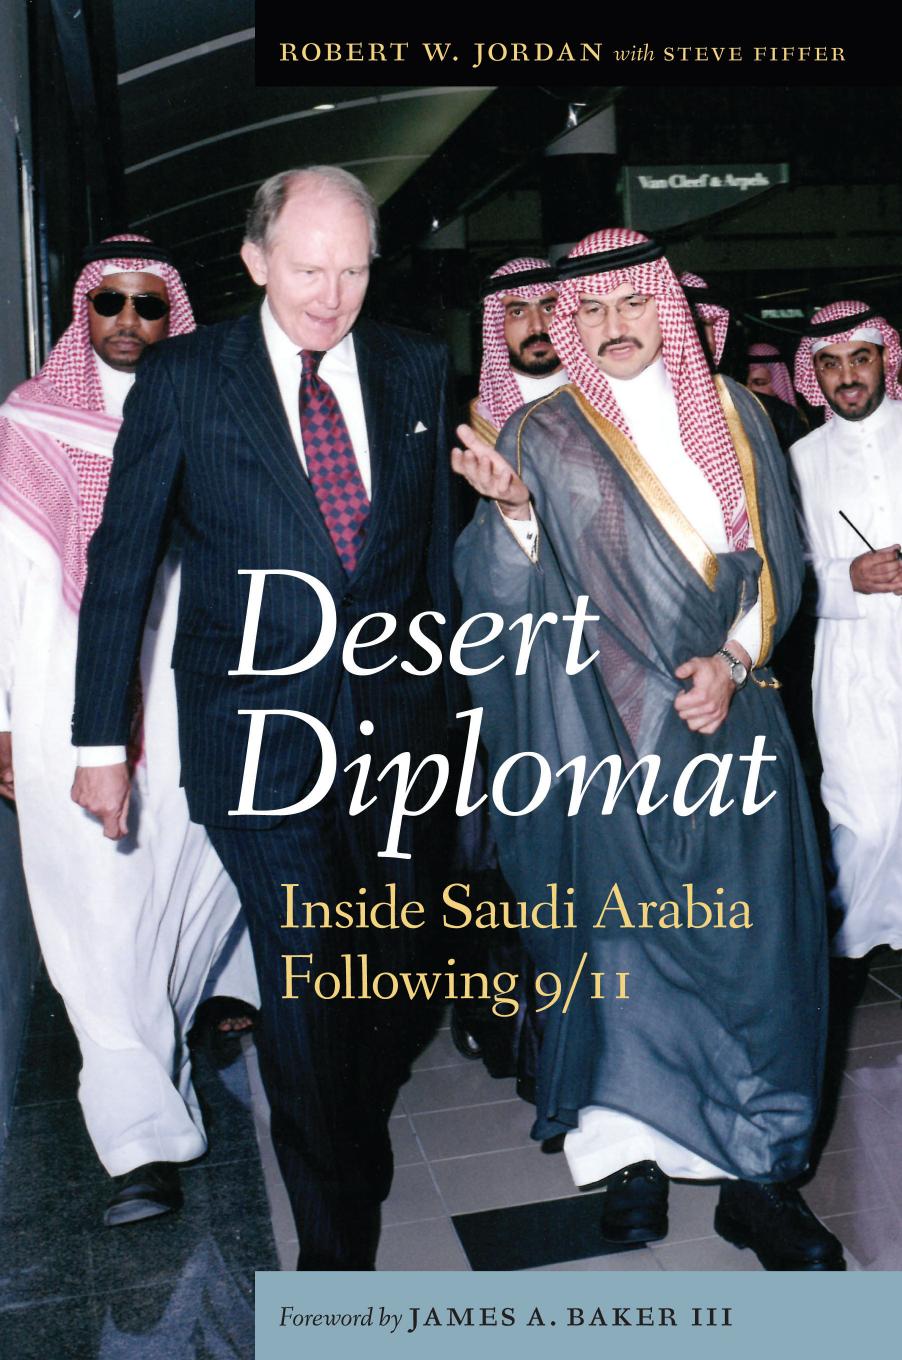 Desert Diplomat: Inside Saudi Arabia Following 911 by Robert W. Jordan & Steve Fiffer